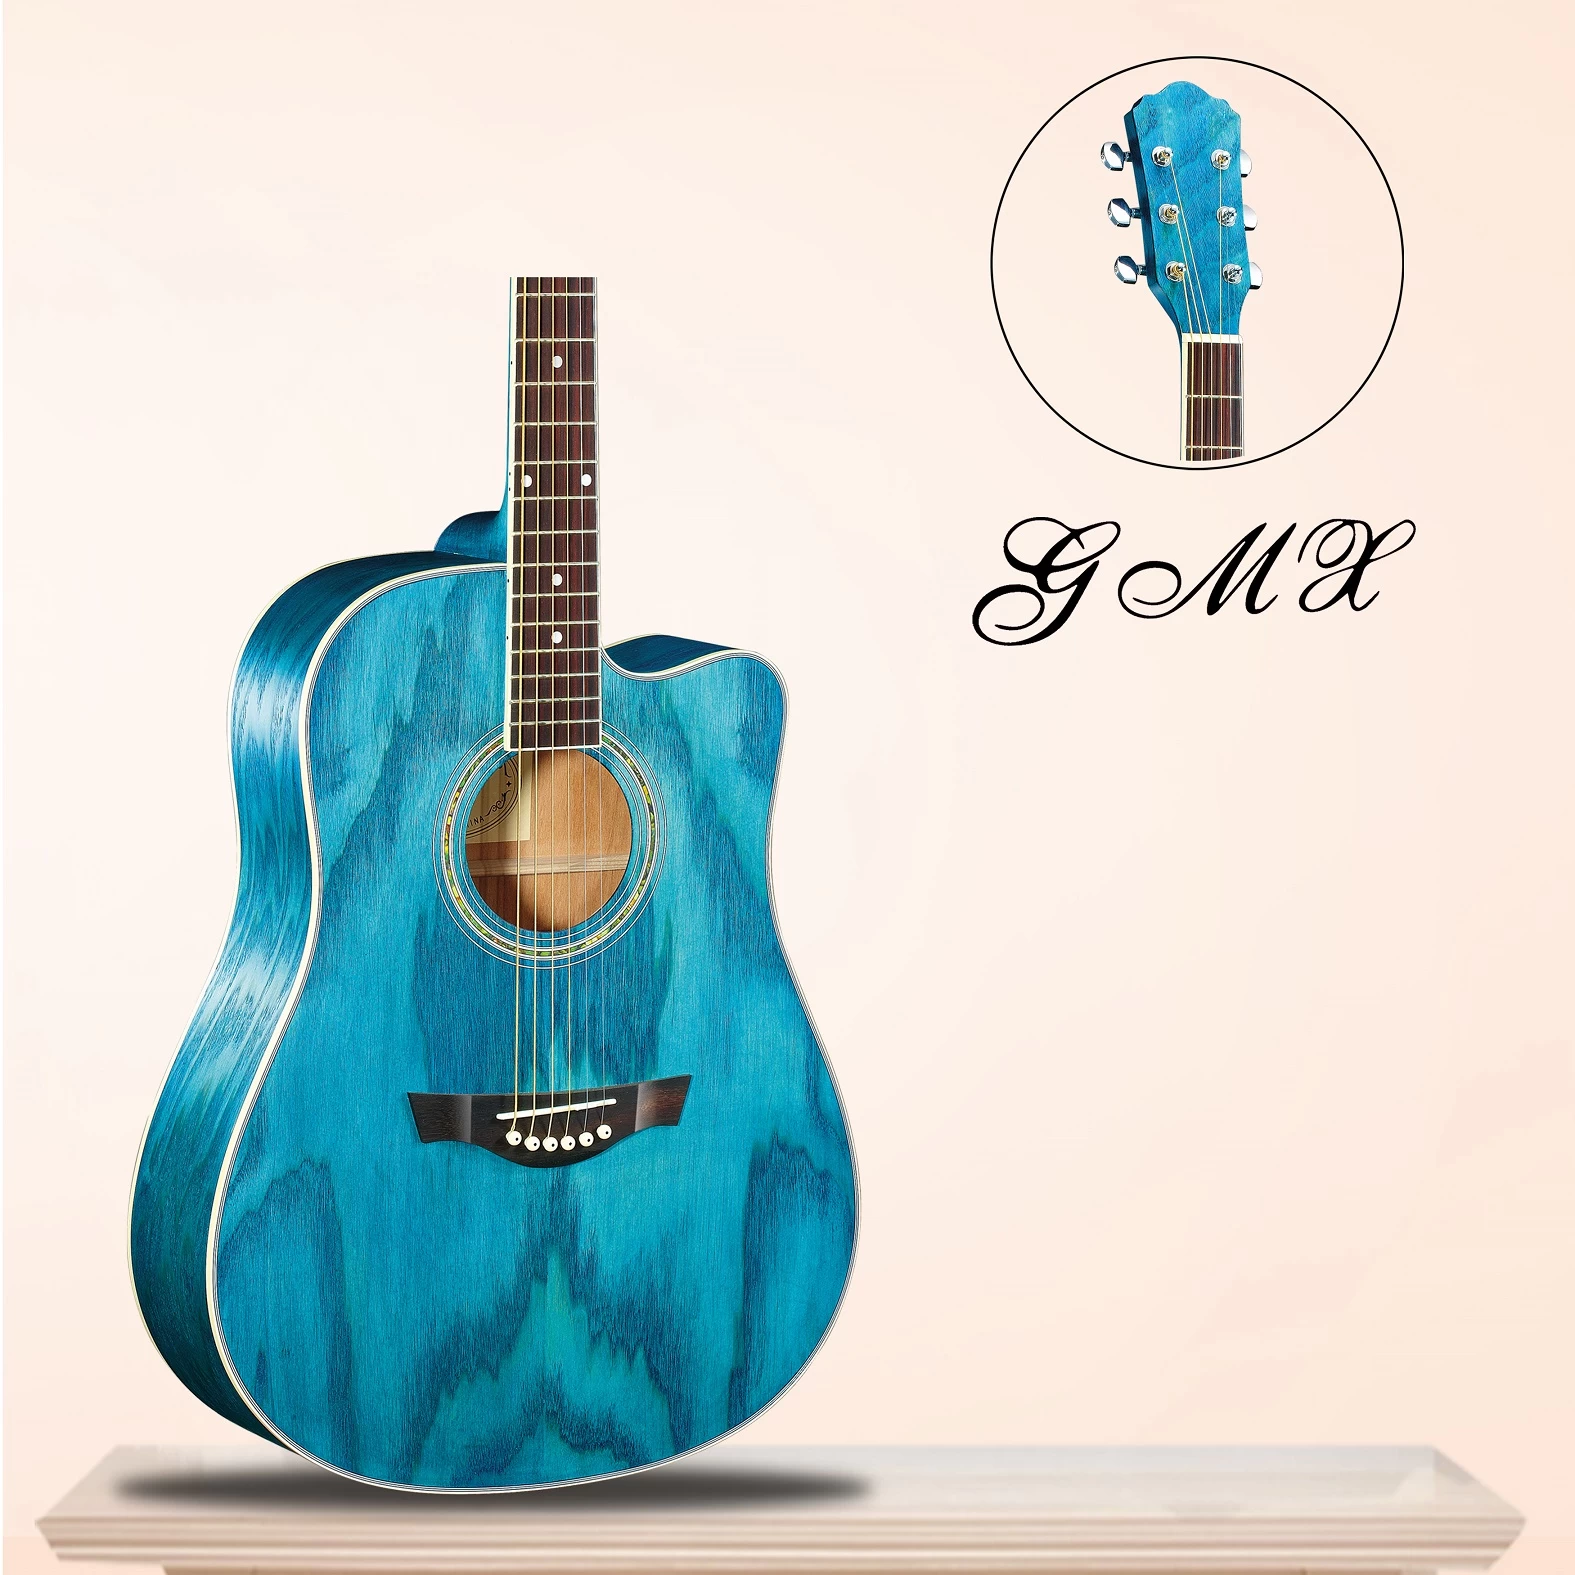 Diecast chrome head machine wholesale high end plywood acoustic guitar